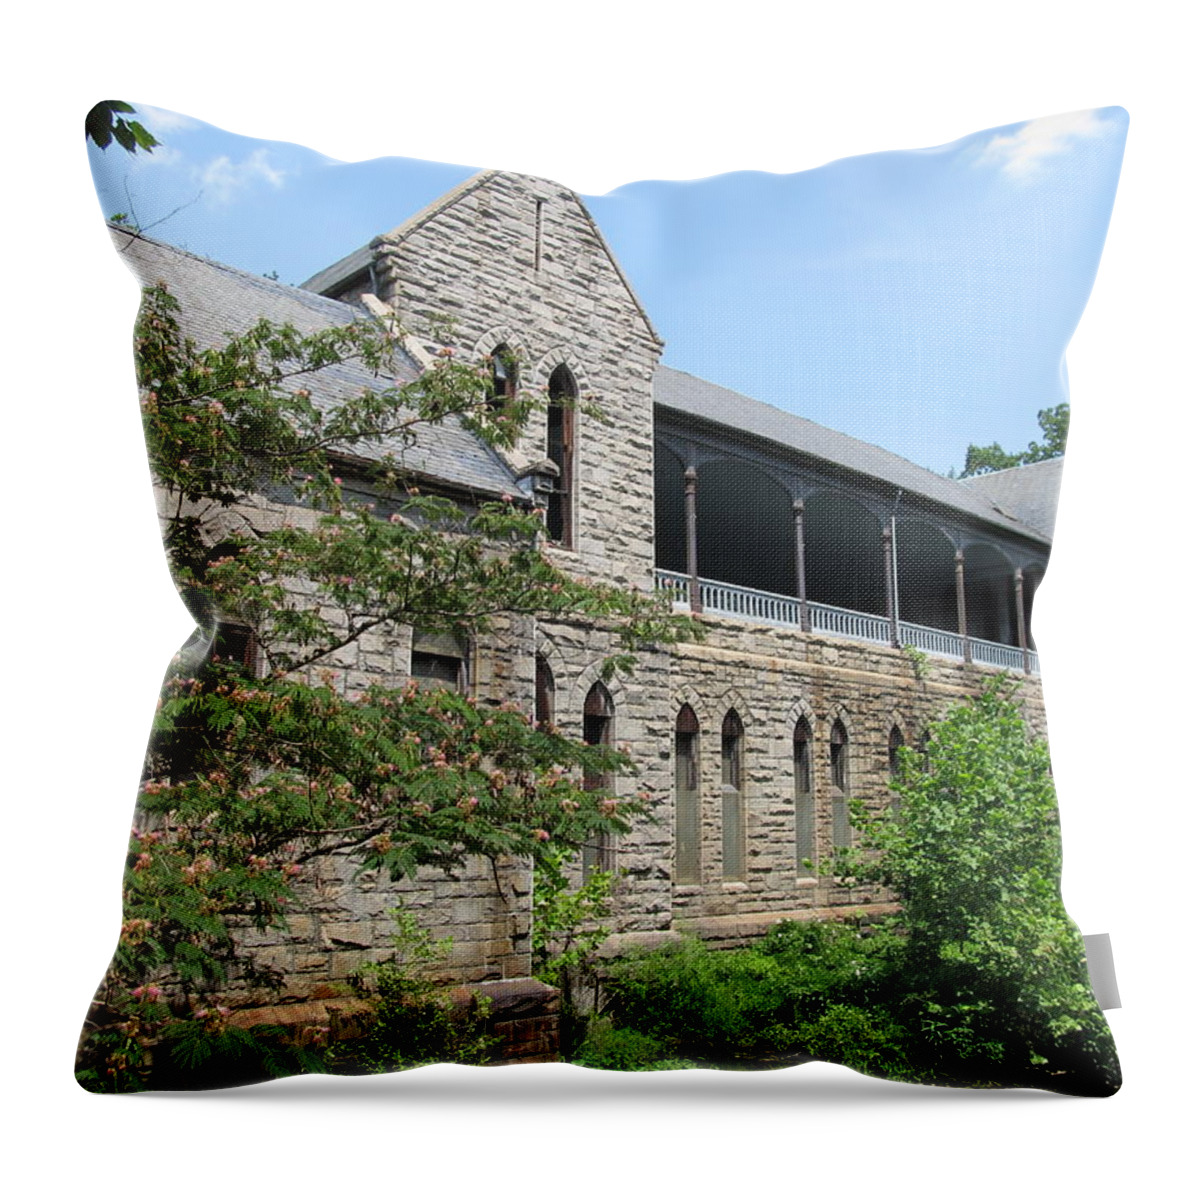 Pump Throw Pillow featuring the photograph Richmond Virginia Pump House by Digital Art Cafe